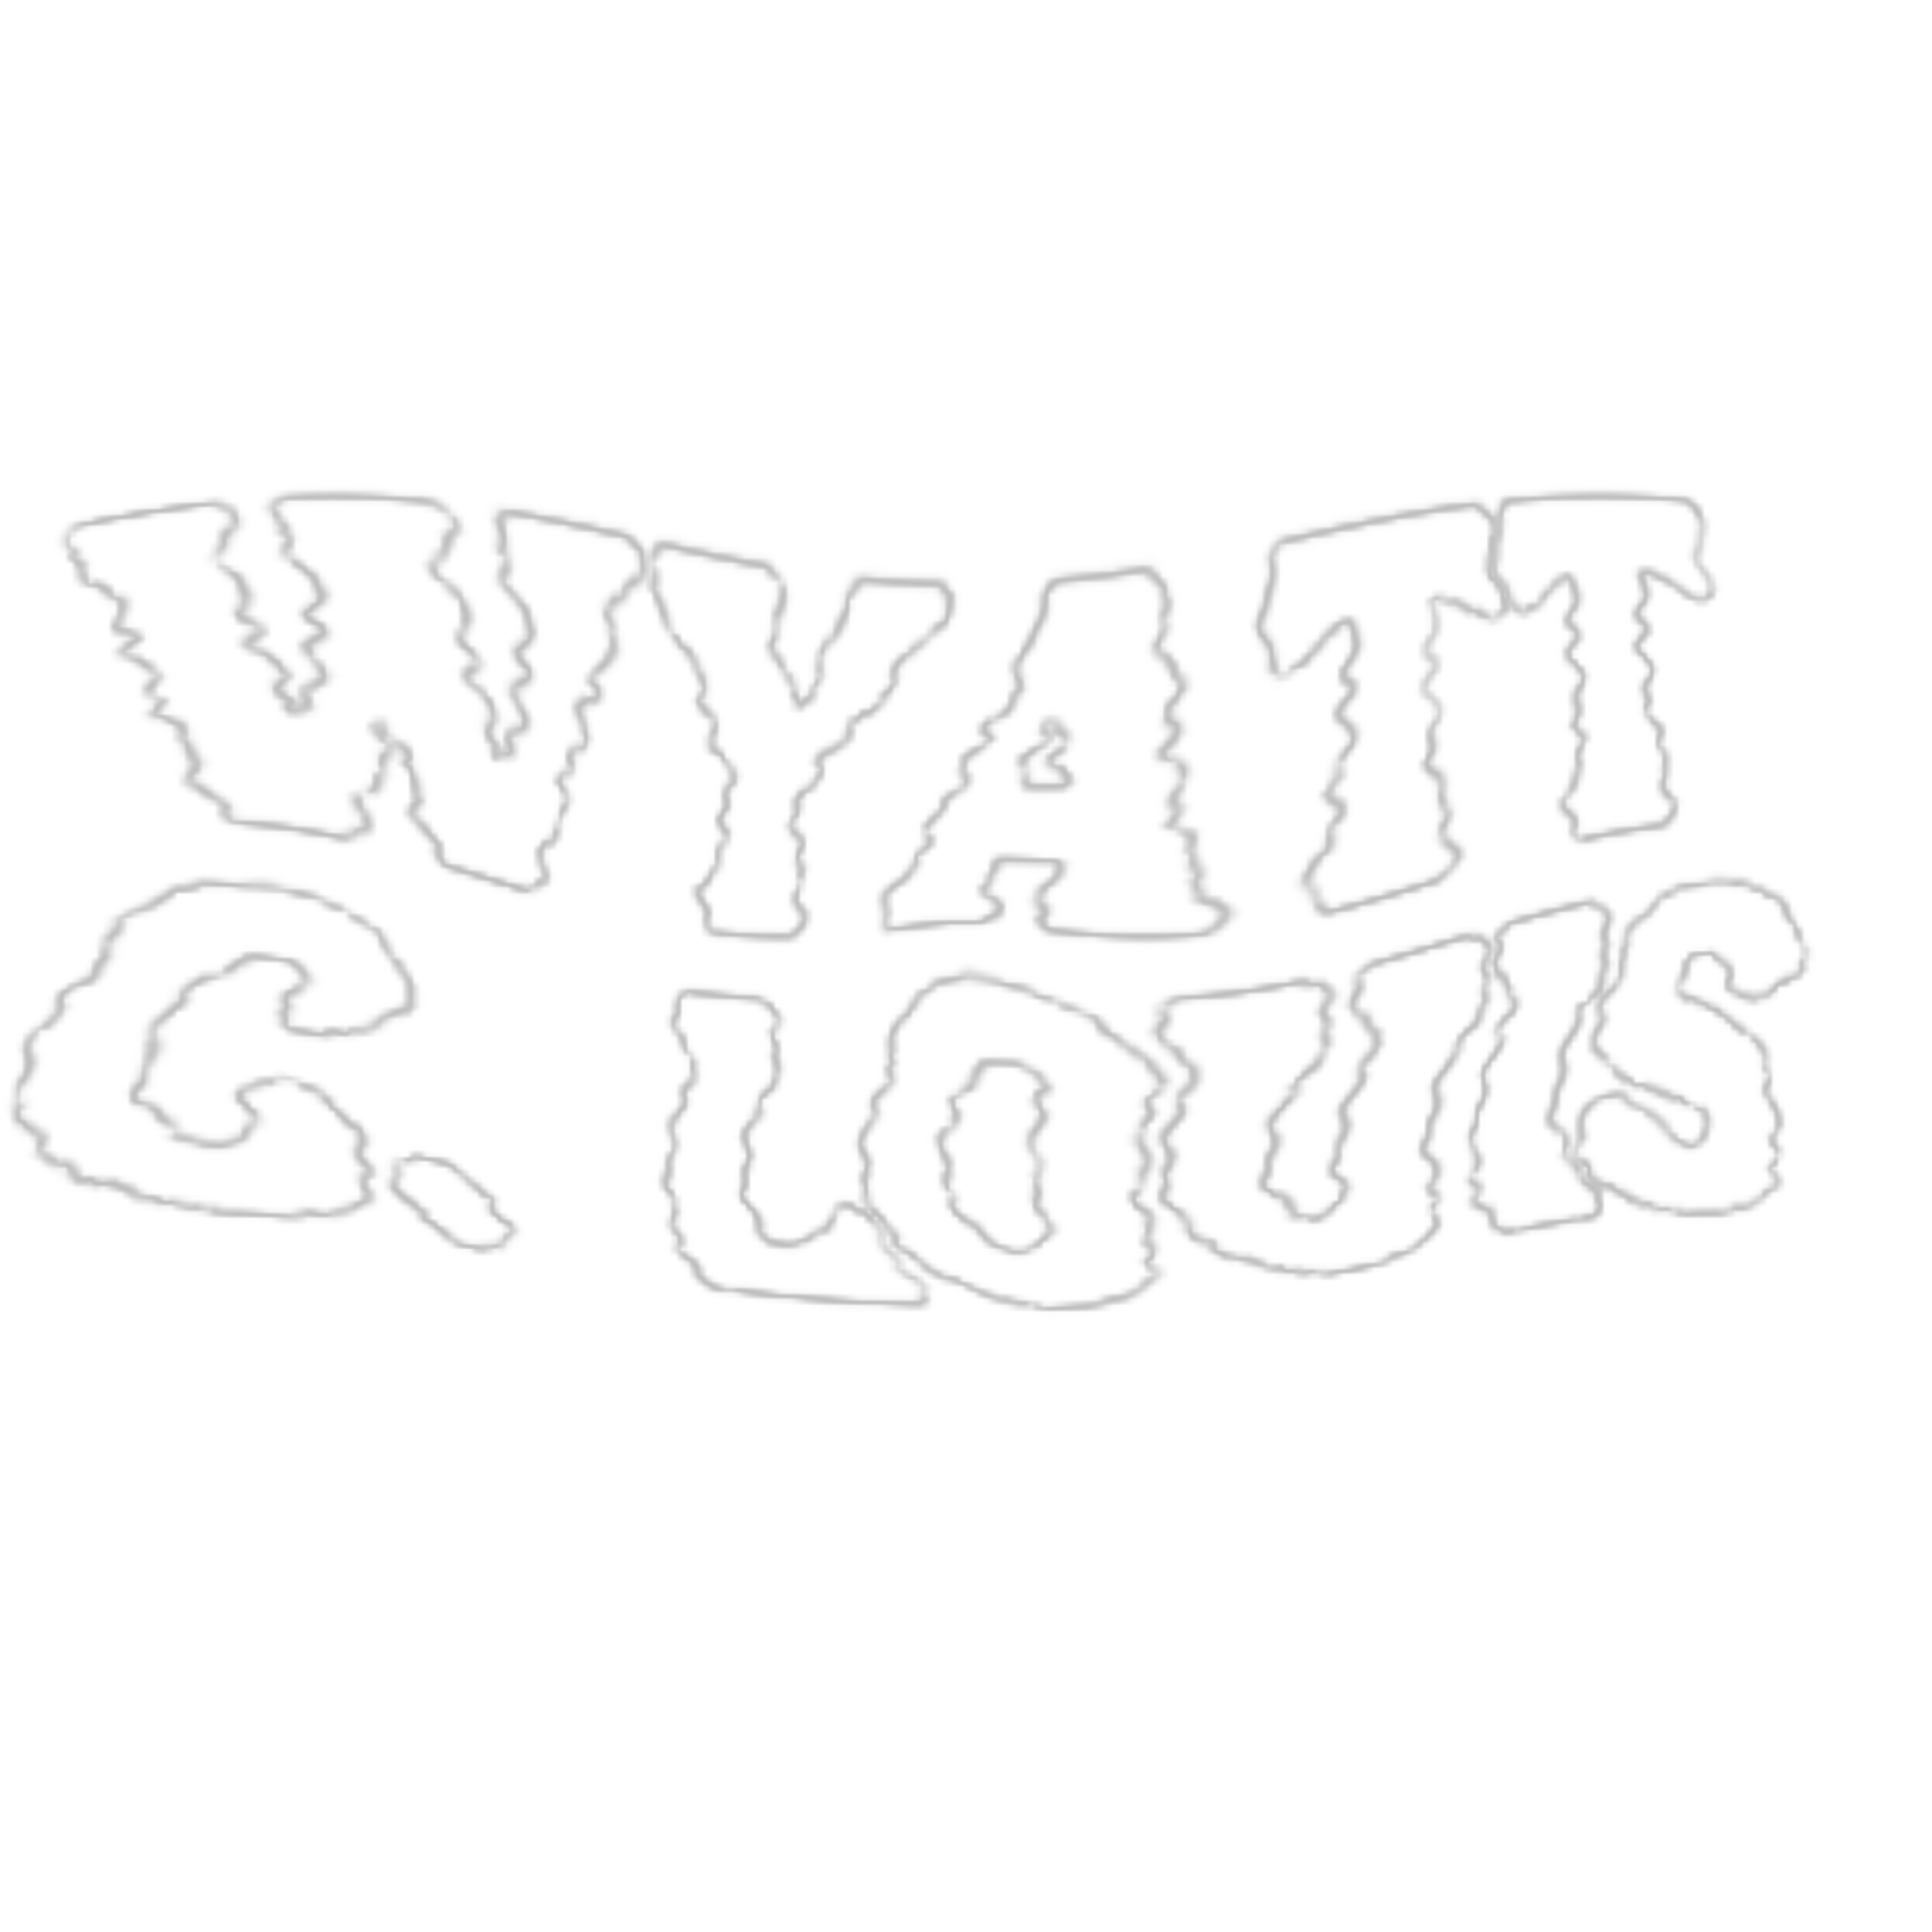 WYATT C. LOUIS